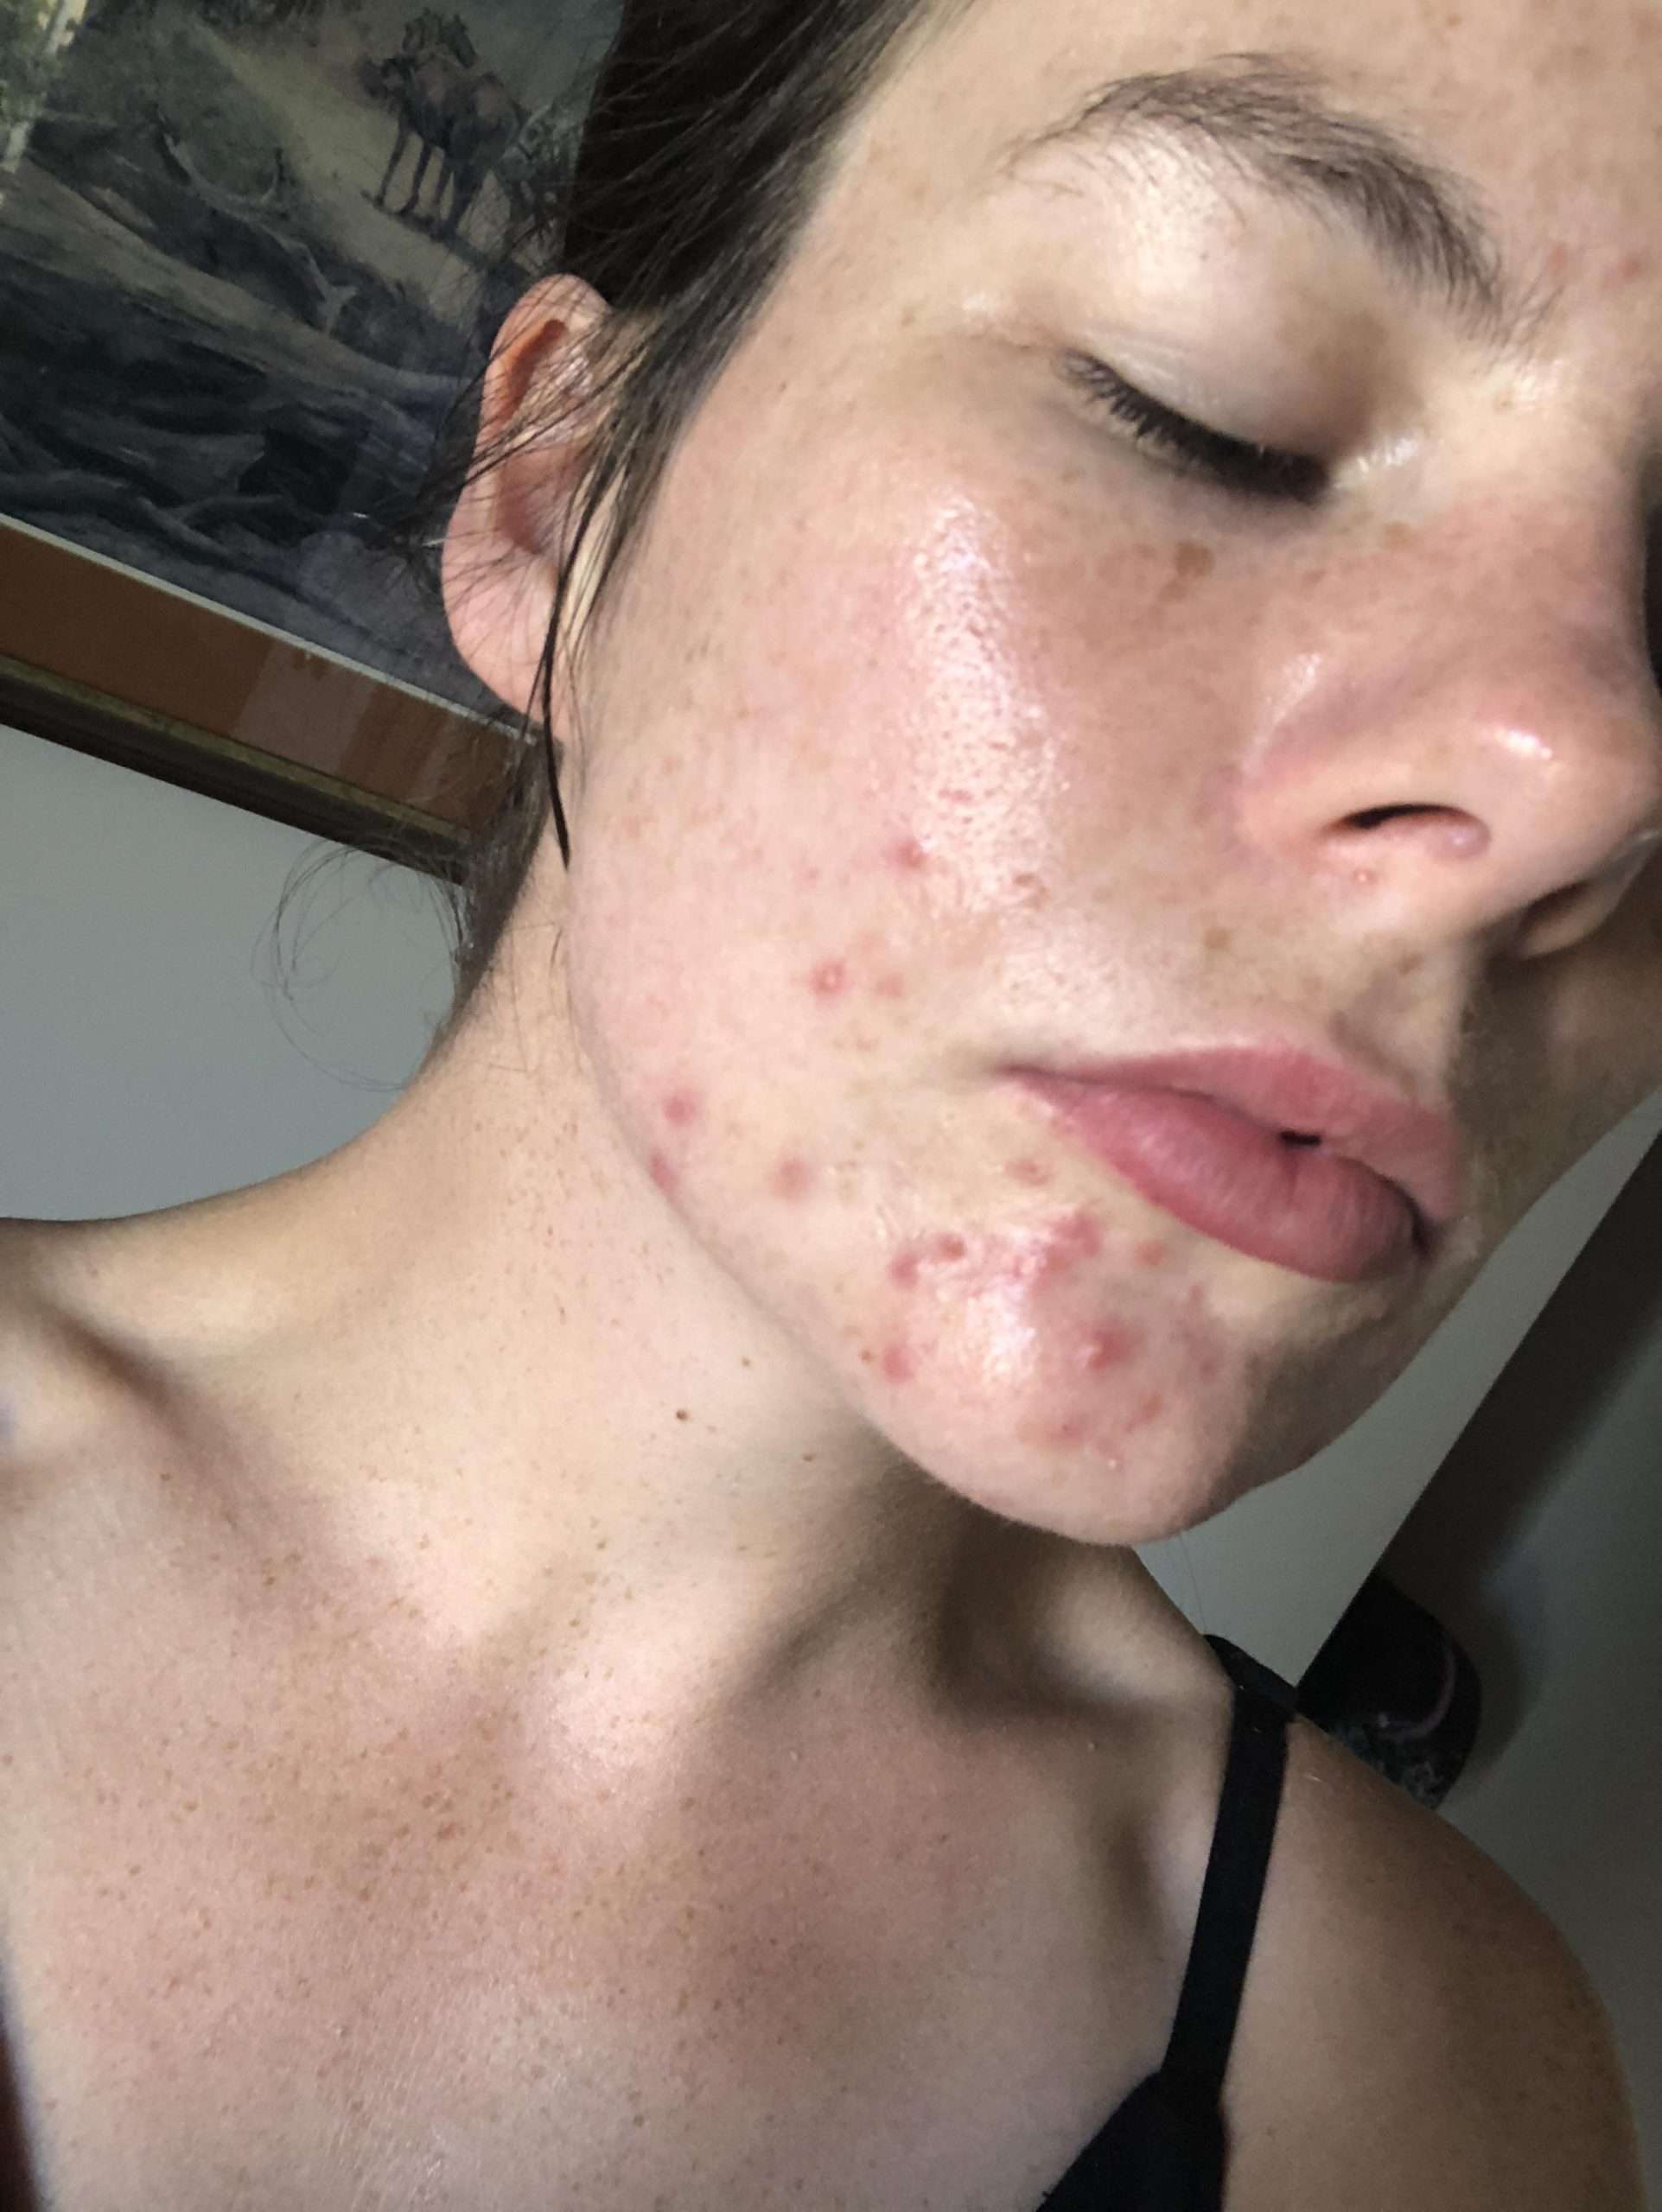 [Acne] I need help tackling hormonal acne! : SkincareAddiction